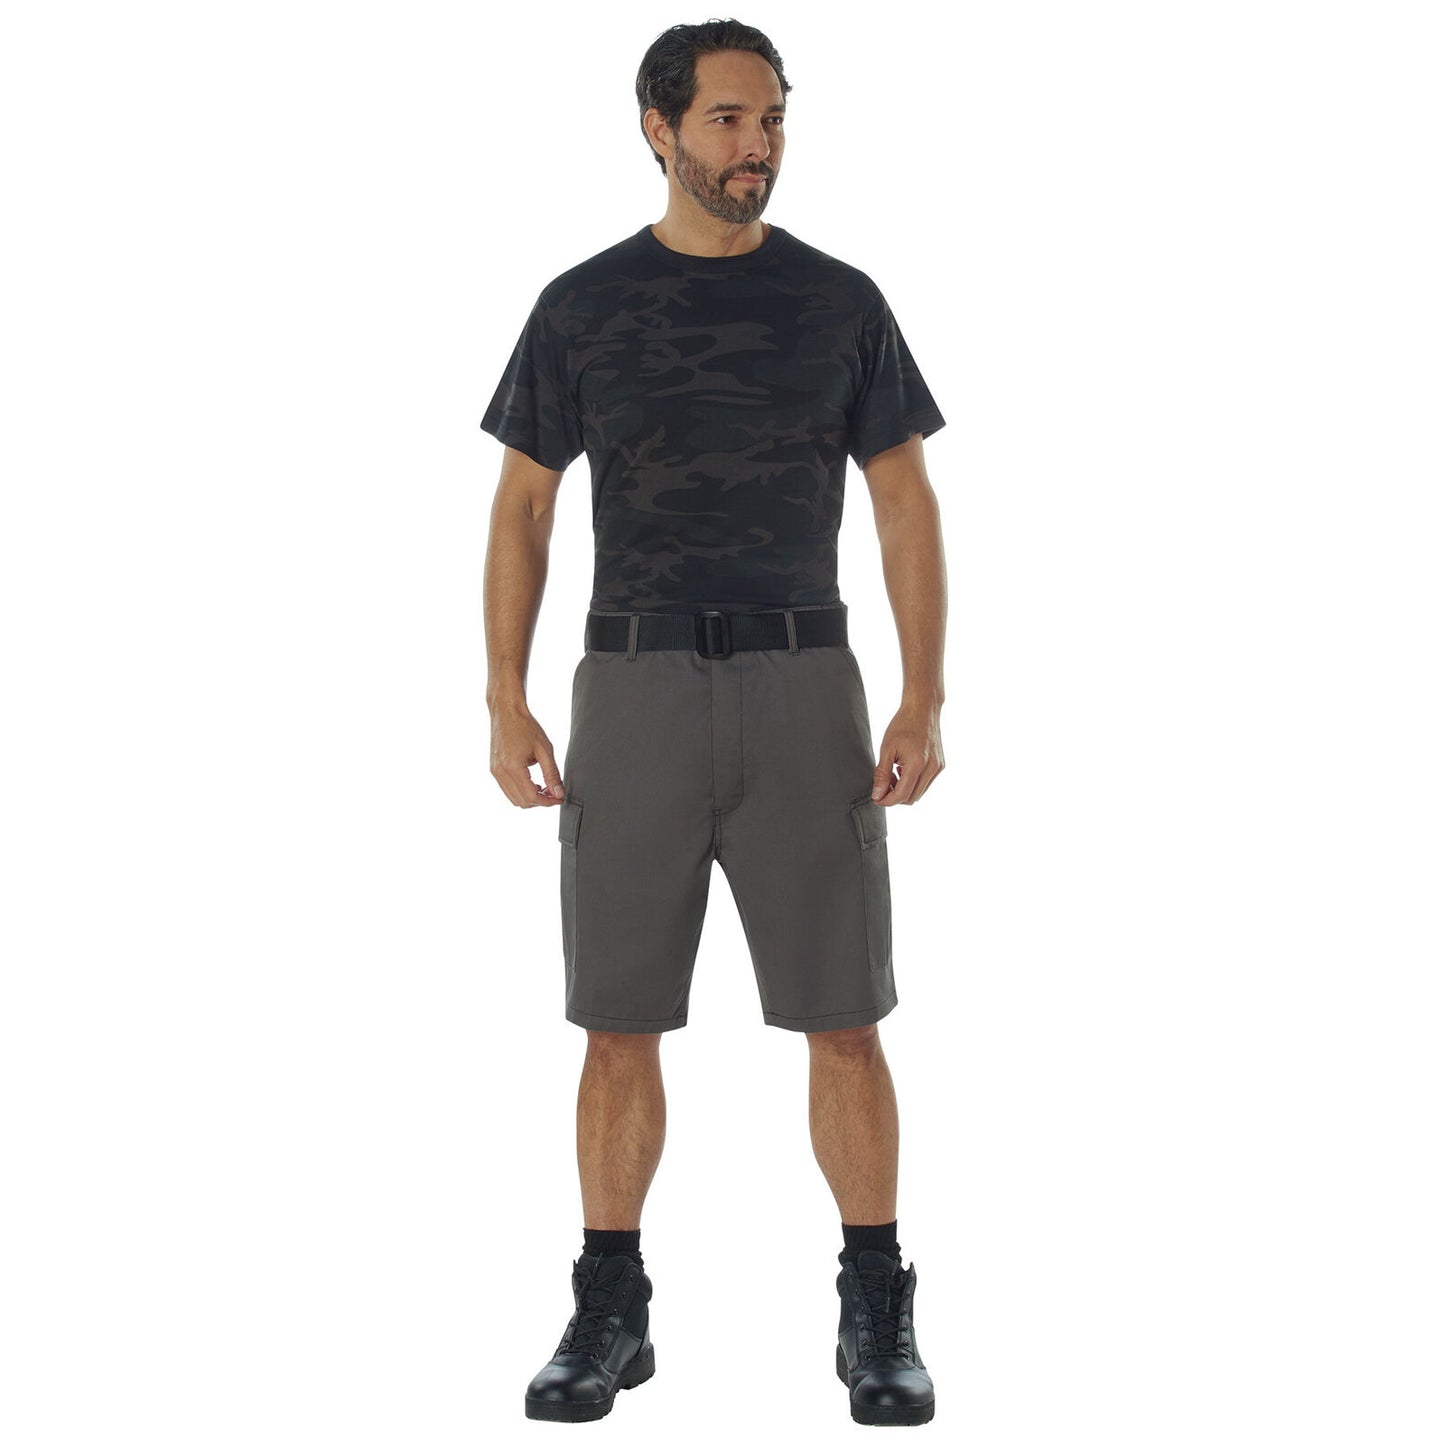 Men's Charcoal Grey Tactical BDU Shorts - Lightweight Poly/Cotton Cargo Shorts